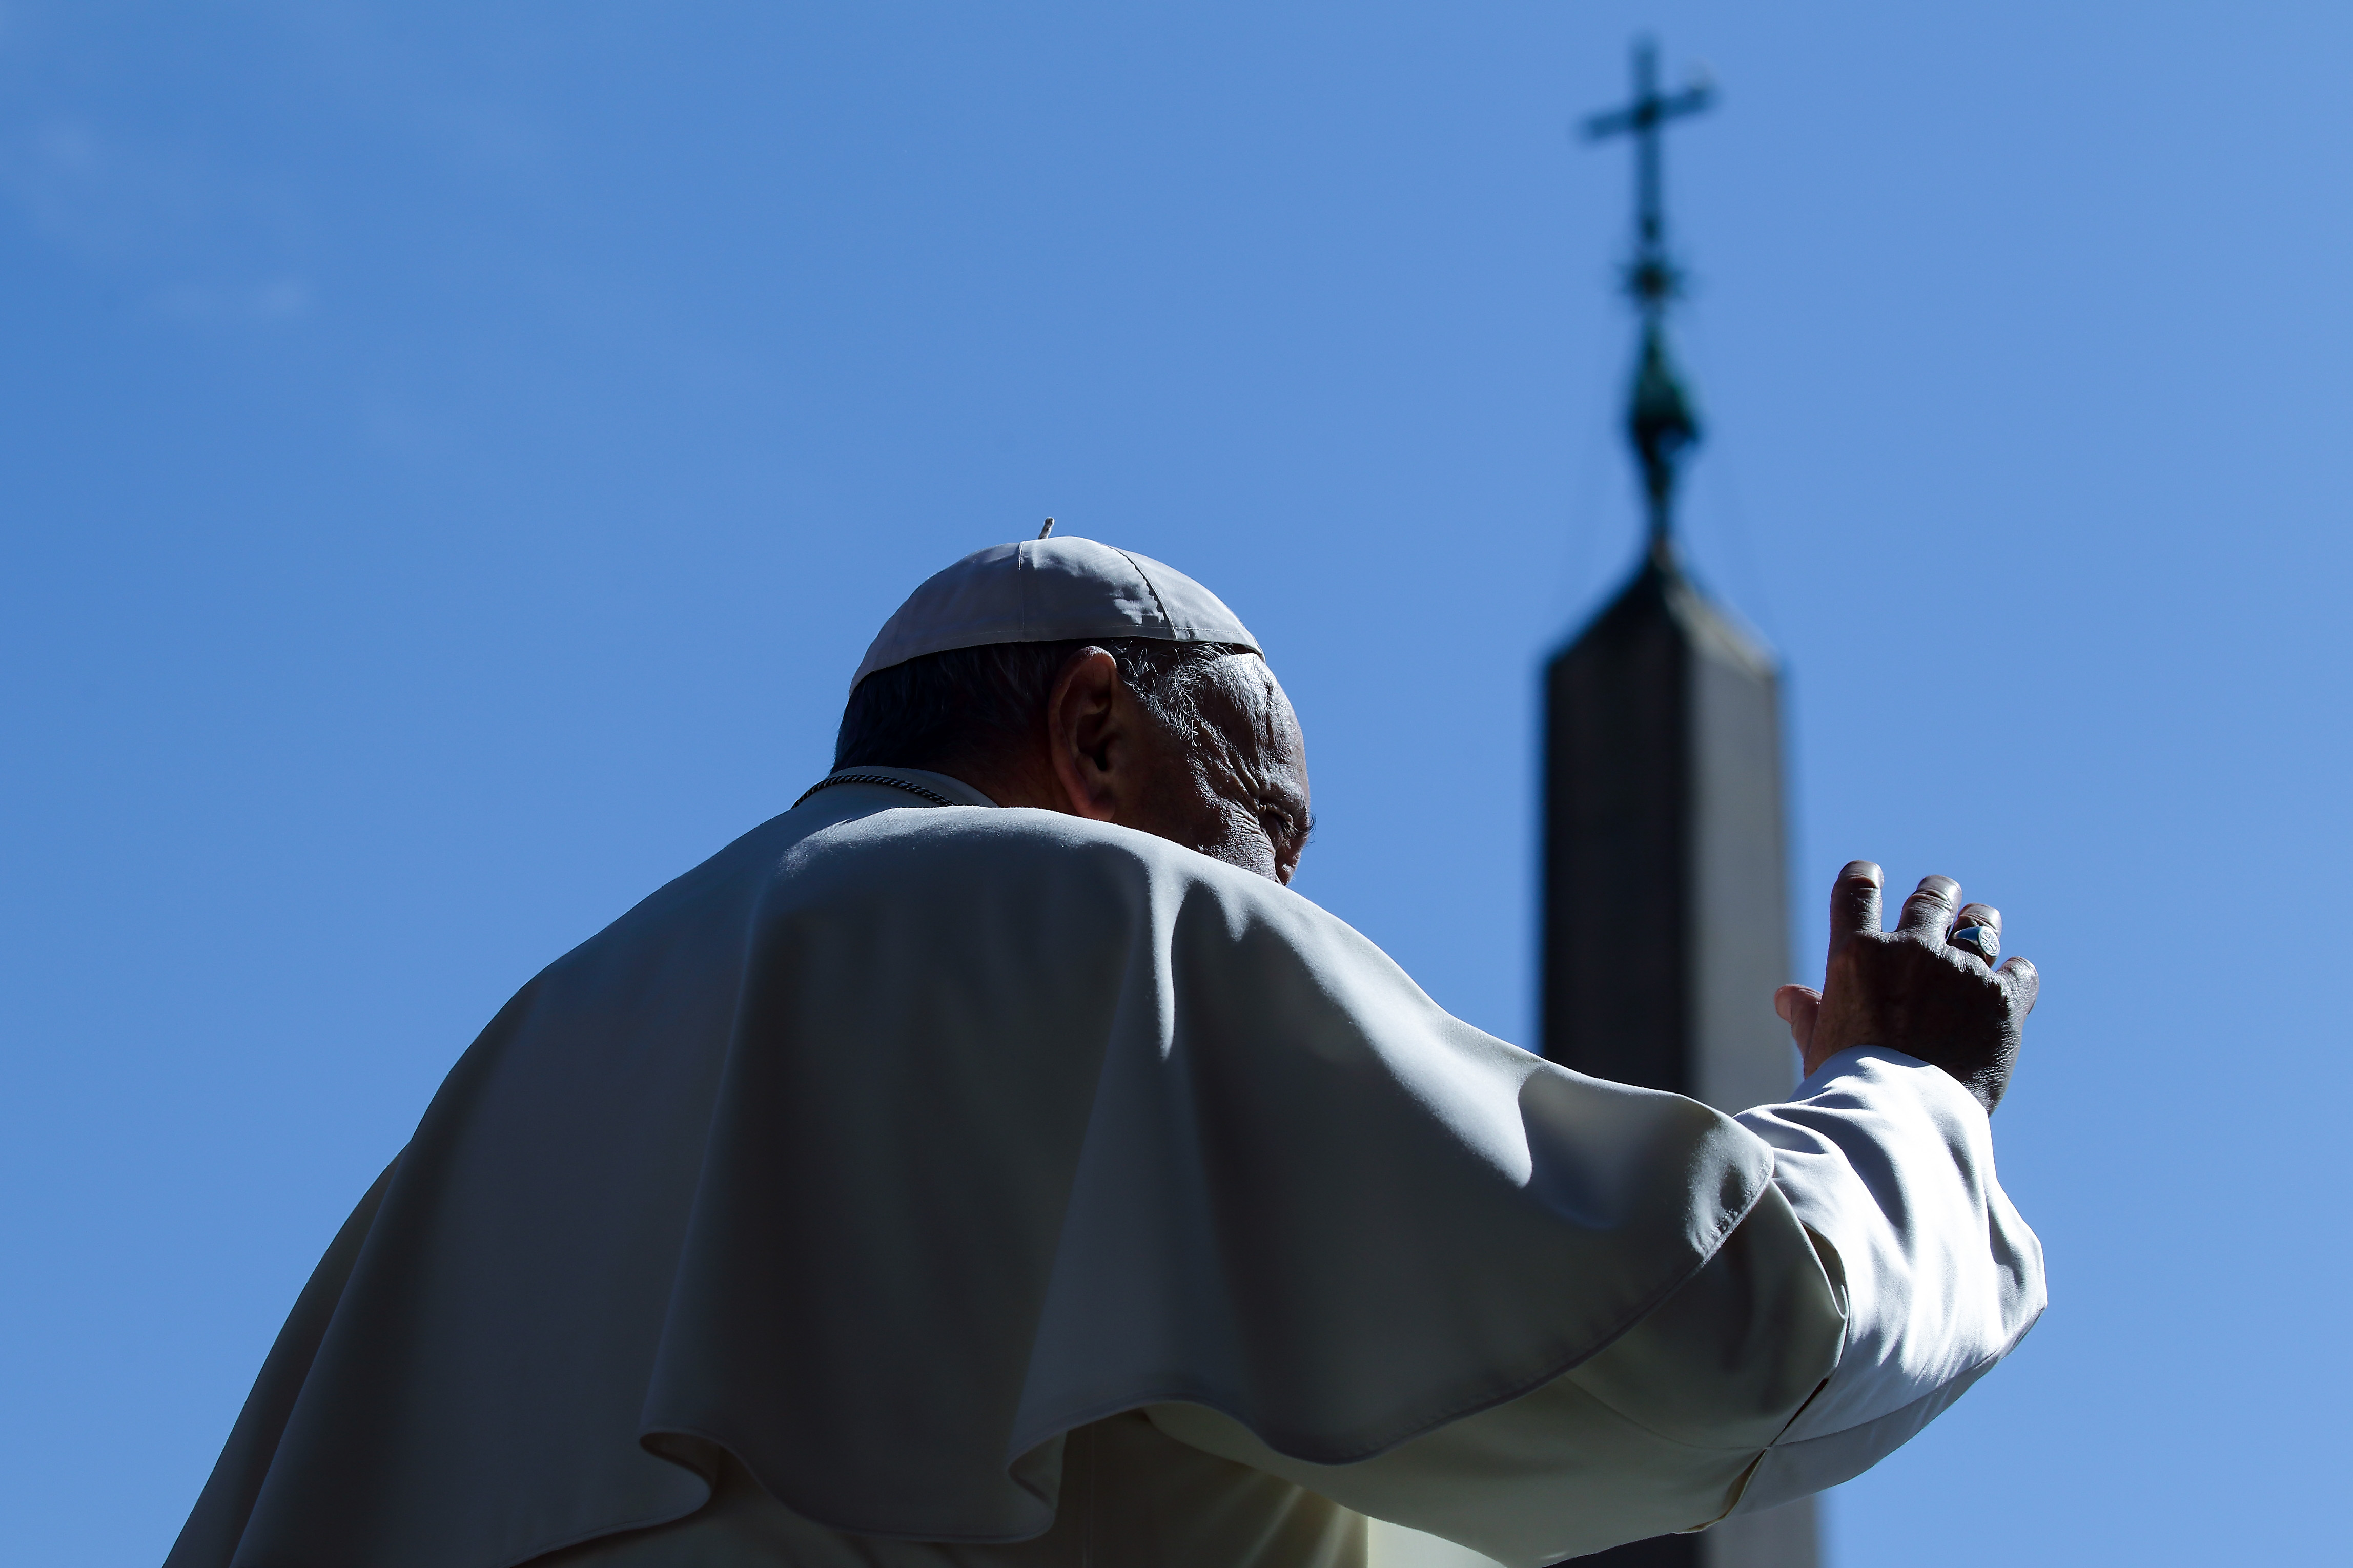 Profoundly amoral culture damaging world finances says Vatican